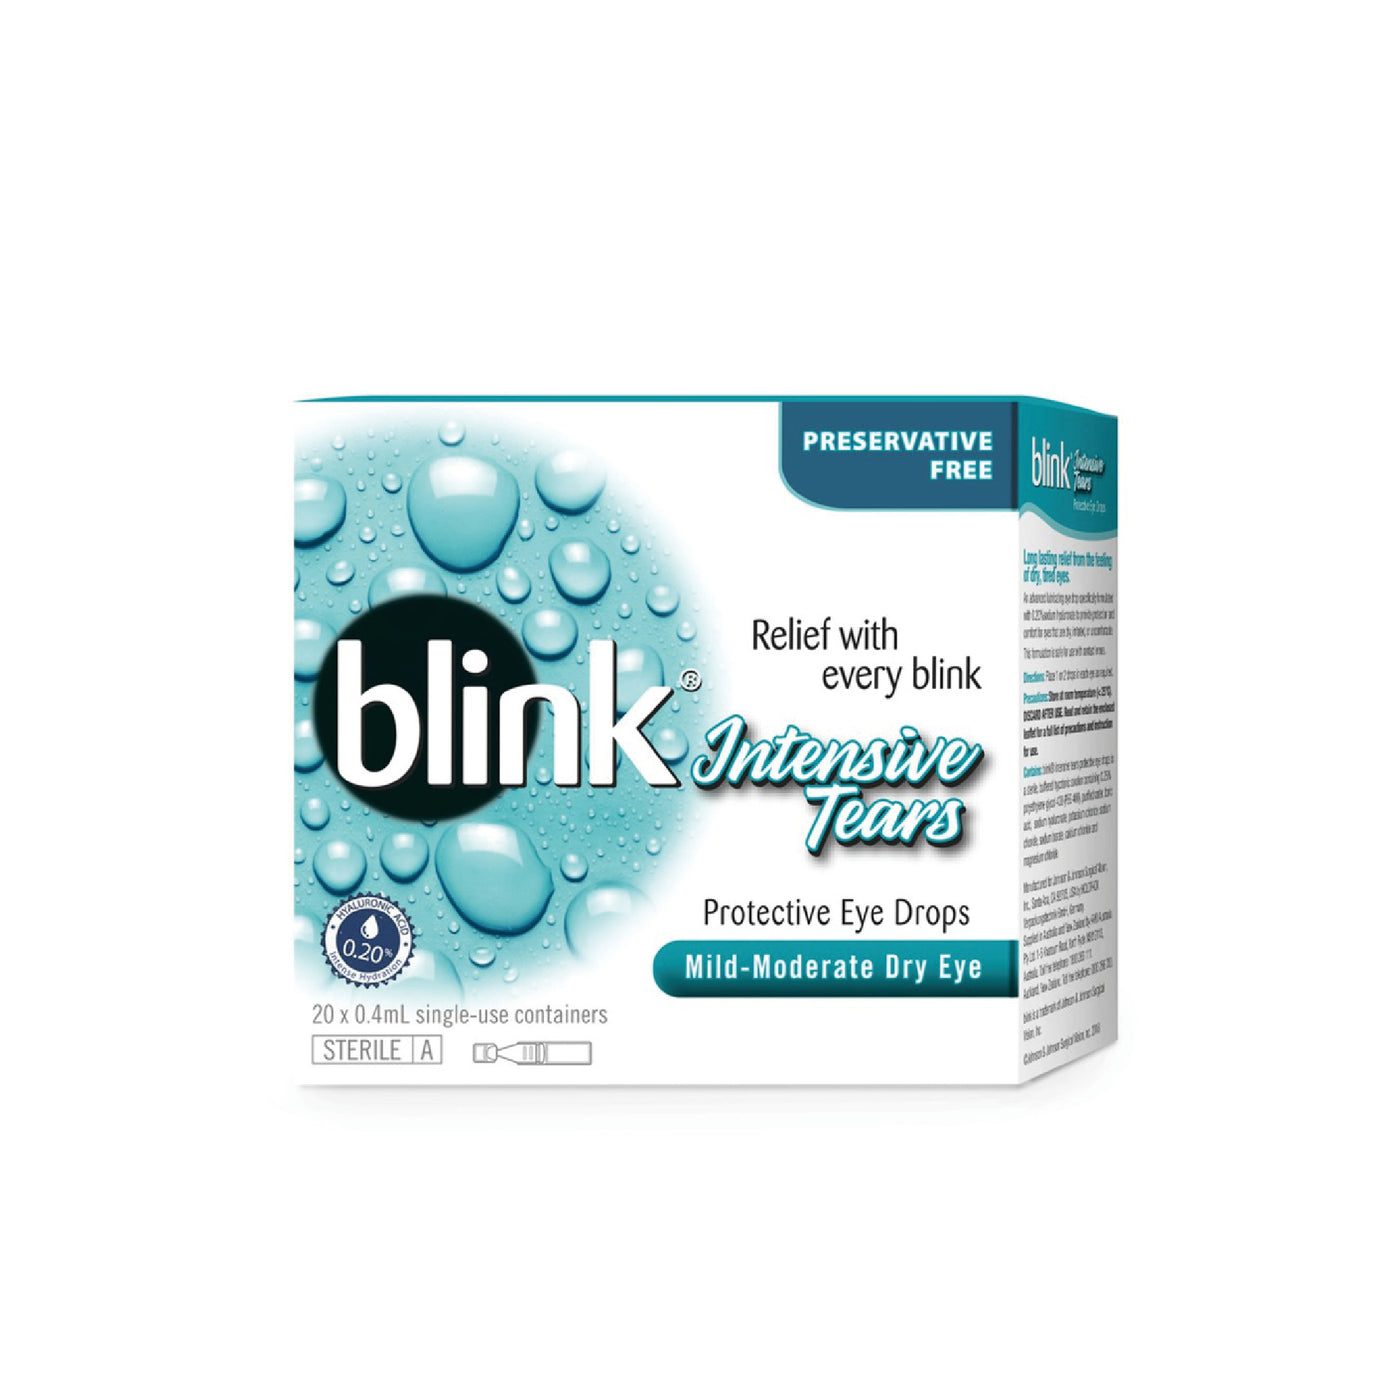 BLINK INTENSIVE TEARS EYE DROP 0.4ml x 20's